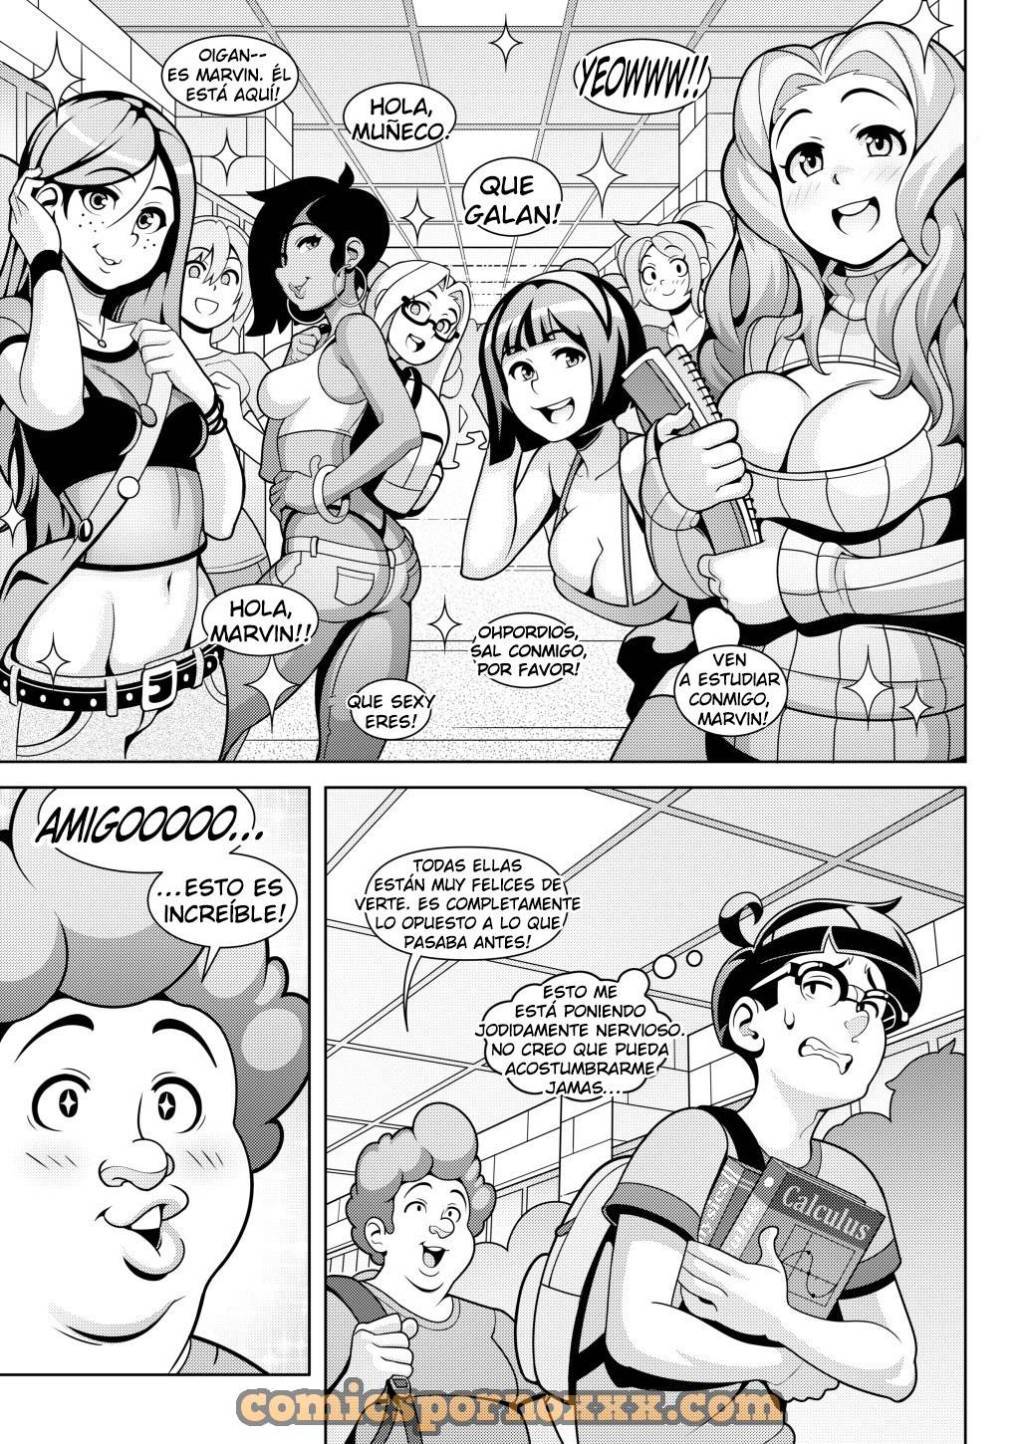 Hot Shit High! #2 - 9 - Comics Porno - Hentai Manga - Cartoon XXX